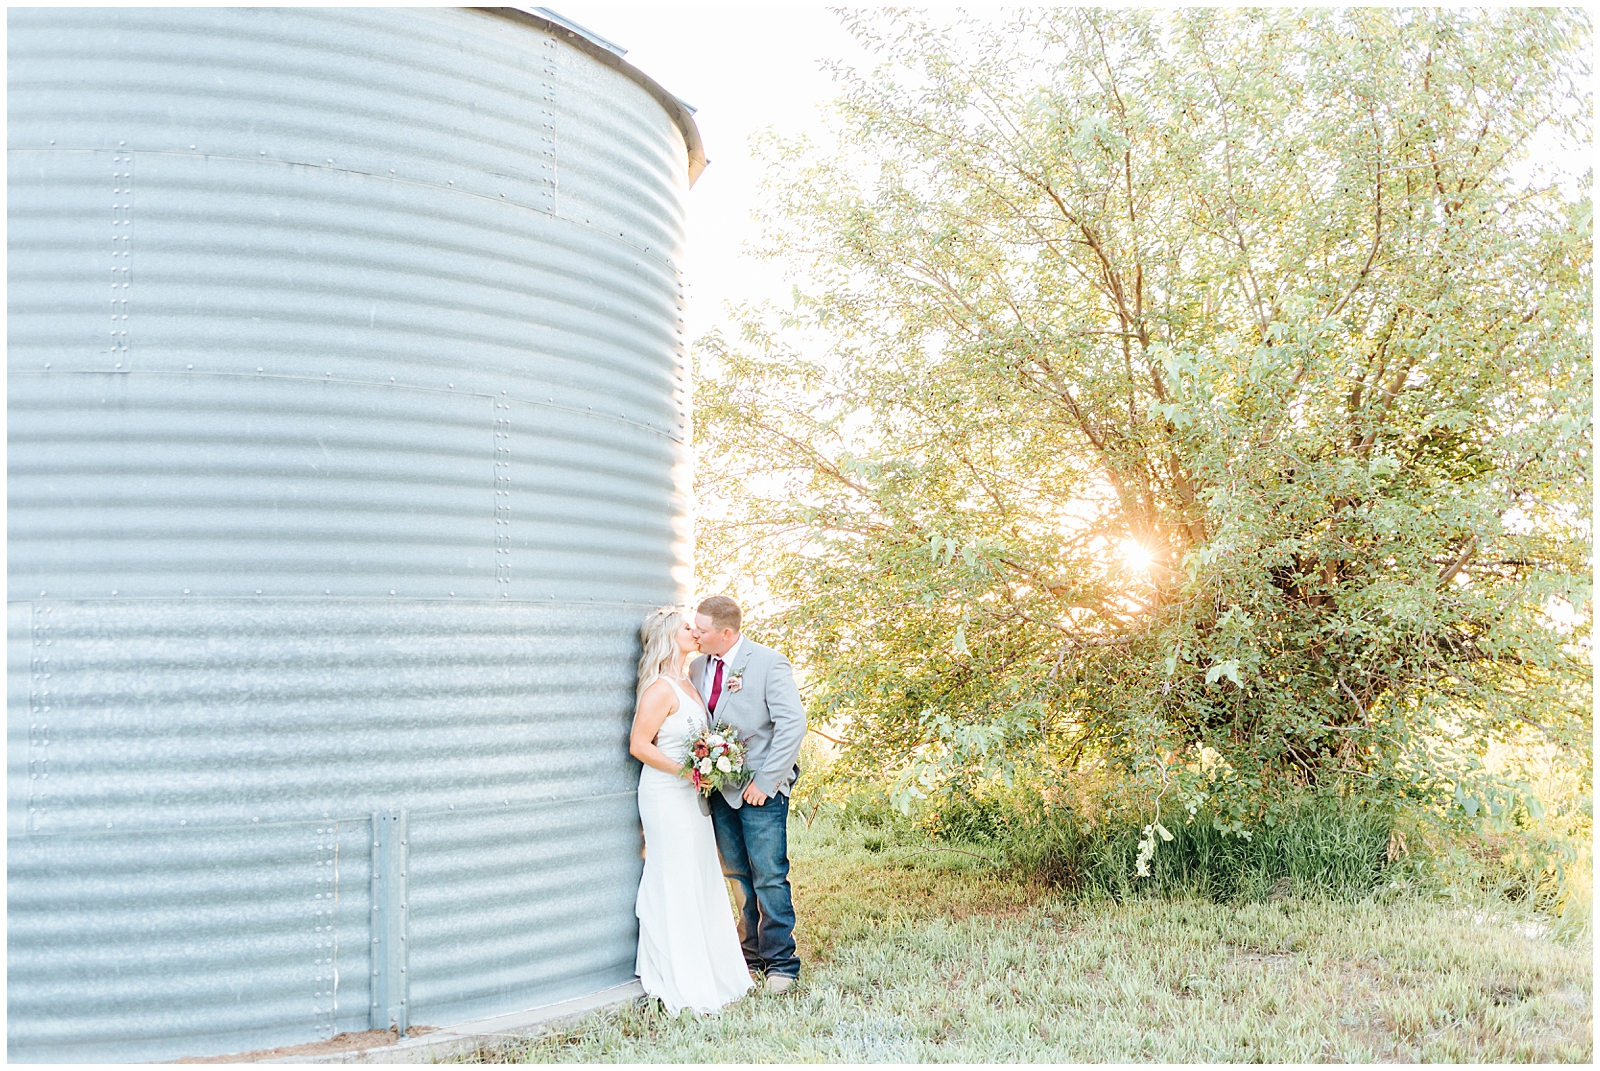 Wedding Portraits at Husband and wife Kissing against the Grain Bin Silos at Private Idaho Ranch Wedding